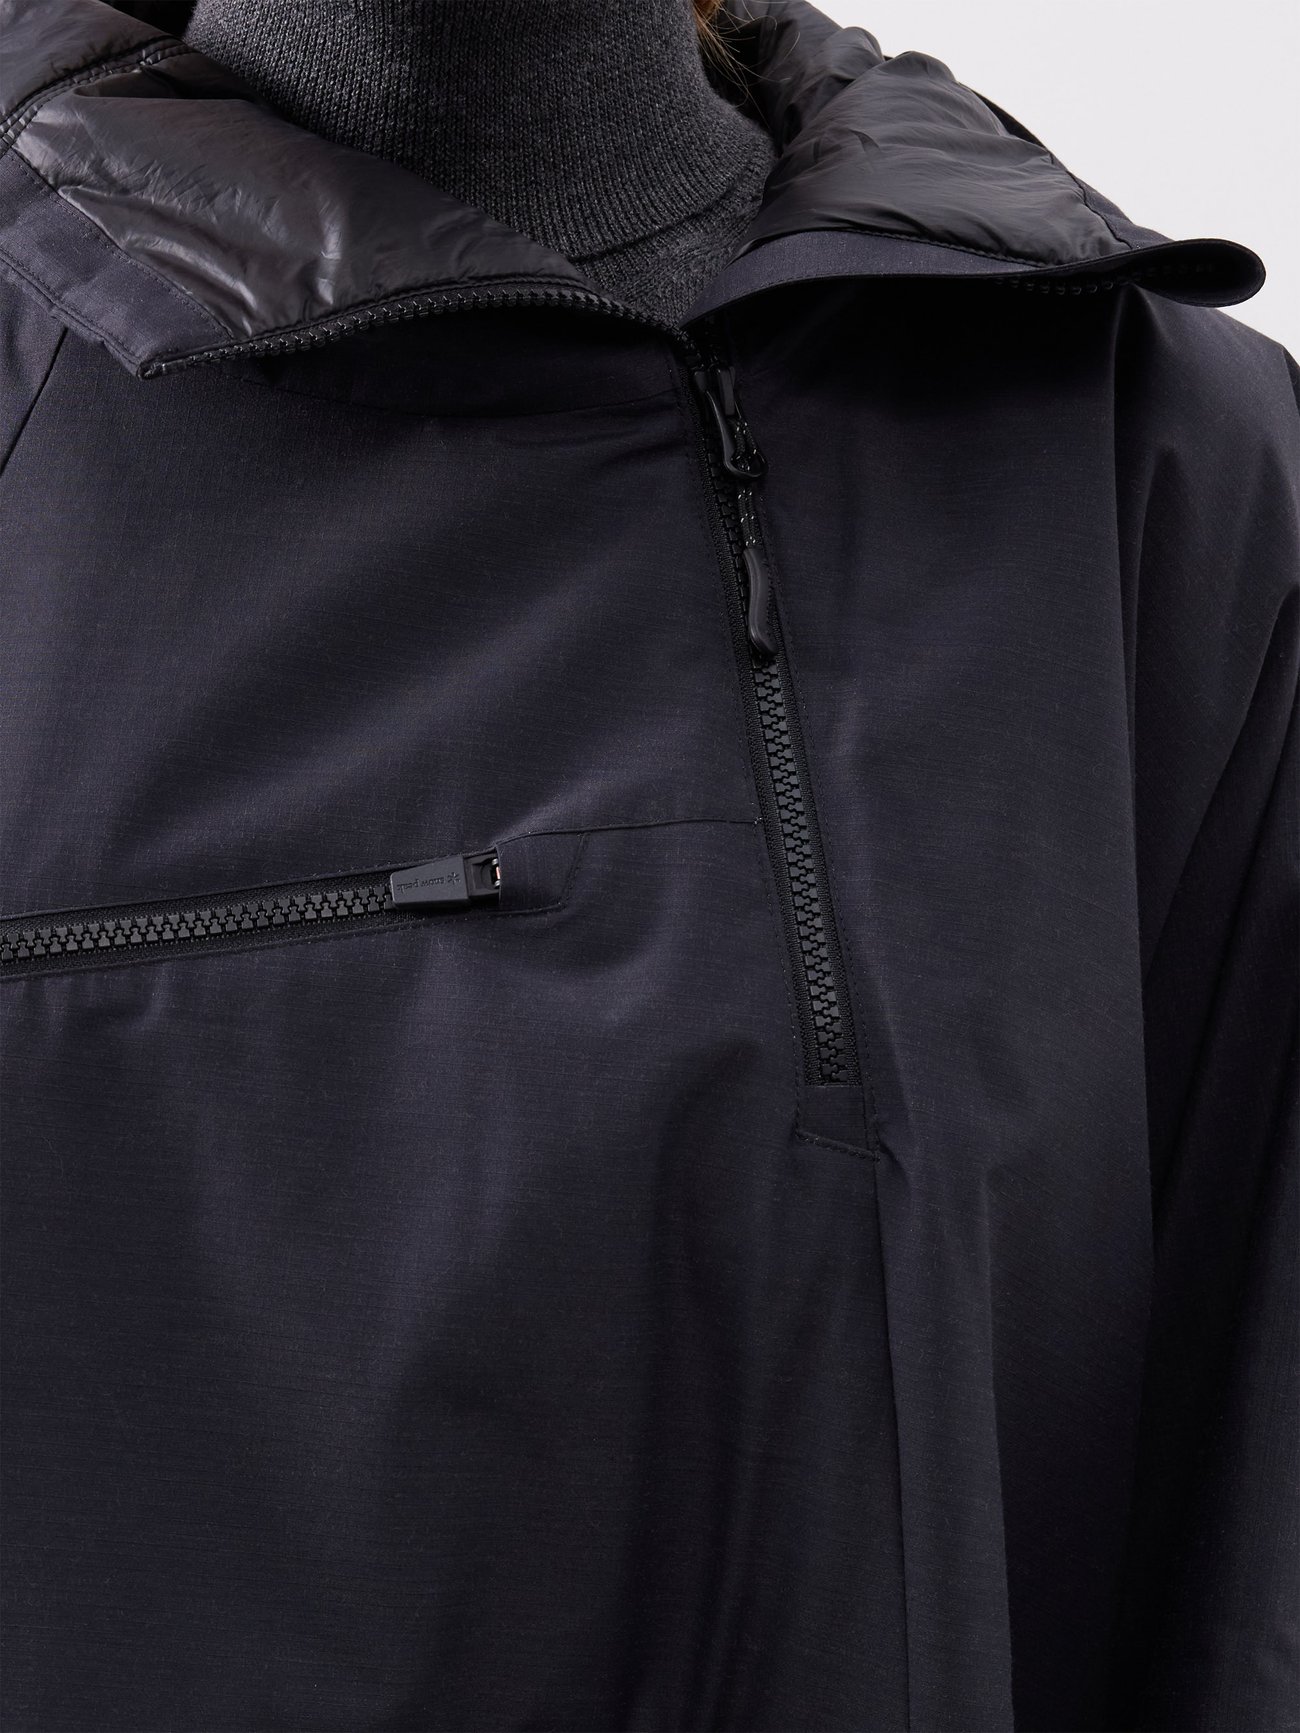 Black FR 2L oversized padded poncho jacket | Snow Peak